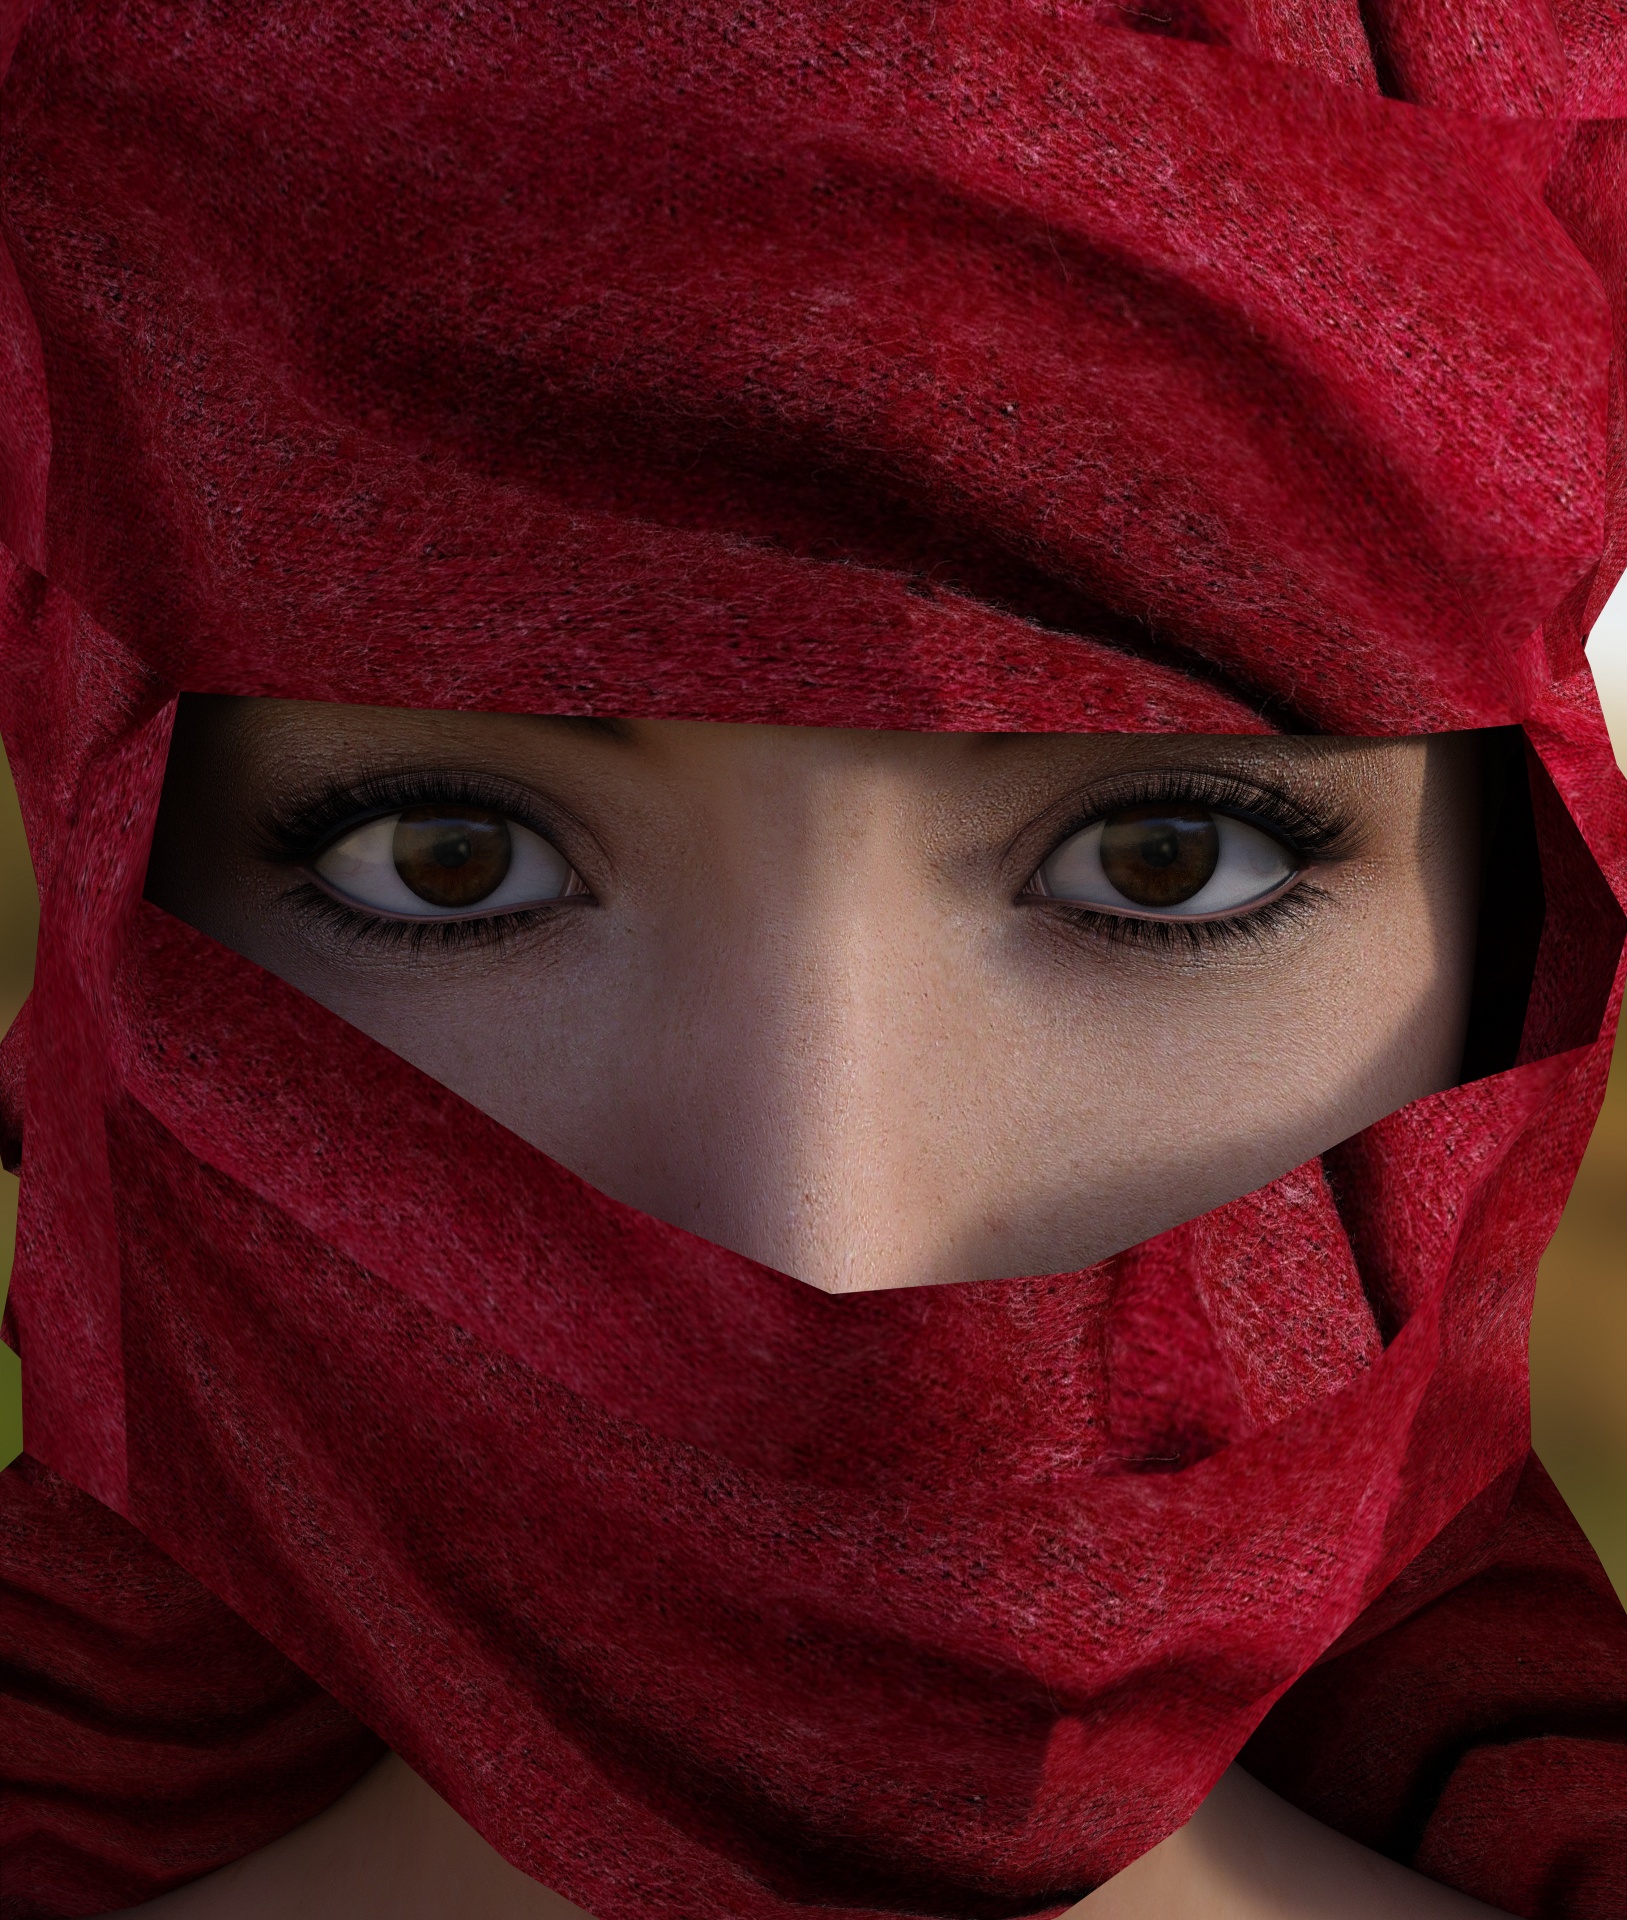 Download free photo of Woman,headscarf,hijab,portrait,head - from needpix.com